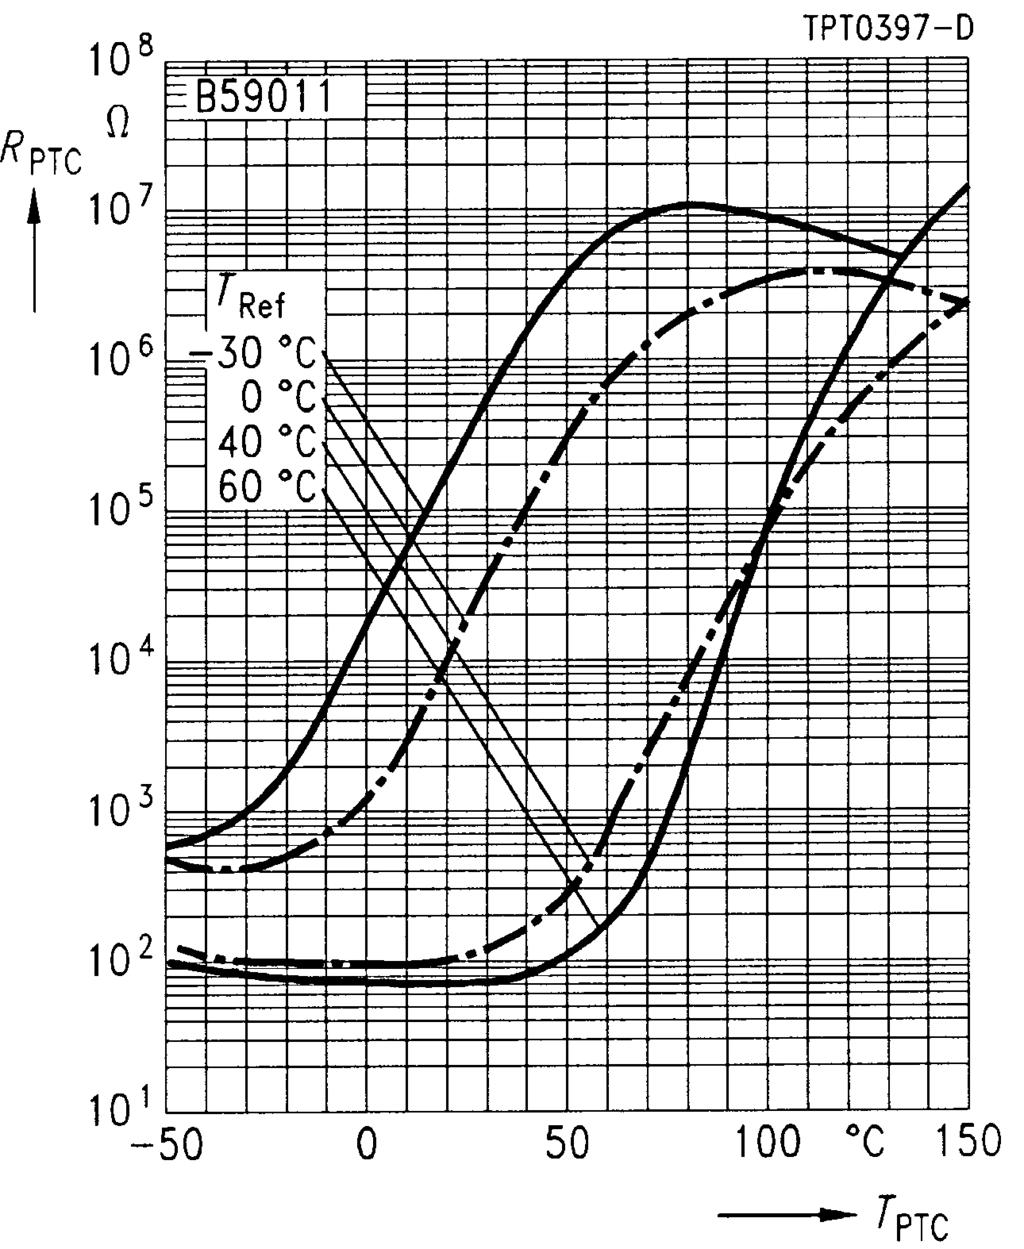 B59011 C 1011 Characteristics (typical) PTC resistance R PTC versus PTC temperature T PTC (measured at low signal voltage) Type I